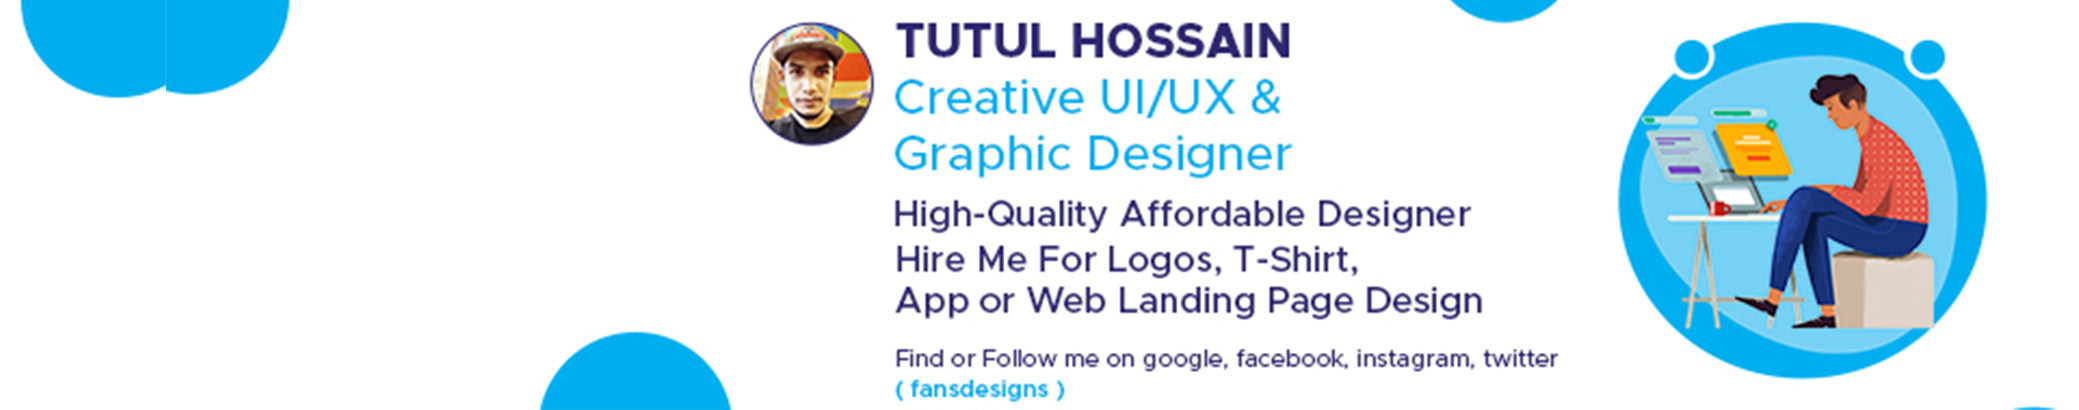 Tutul Hossain's profile banner